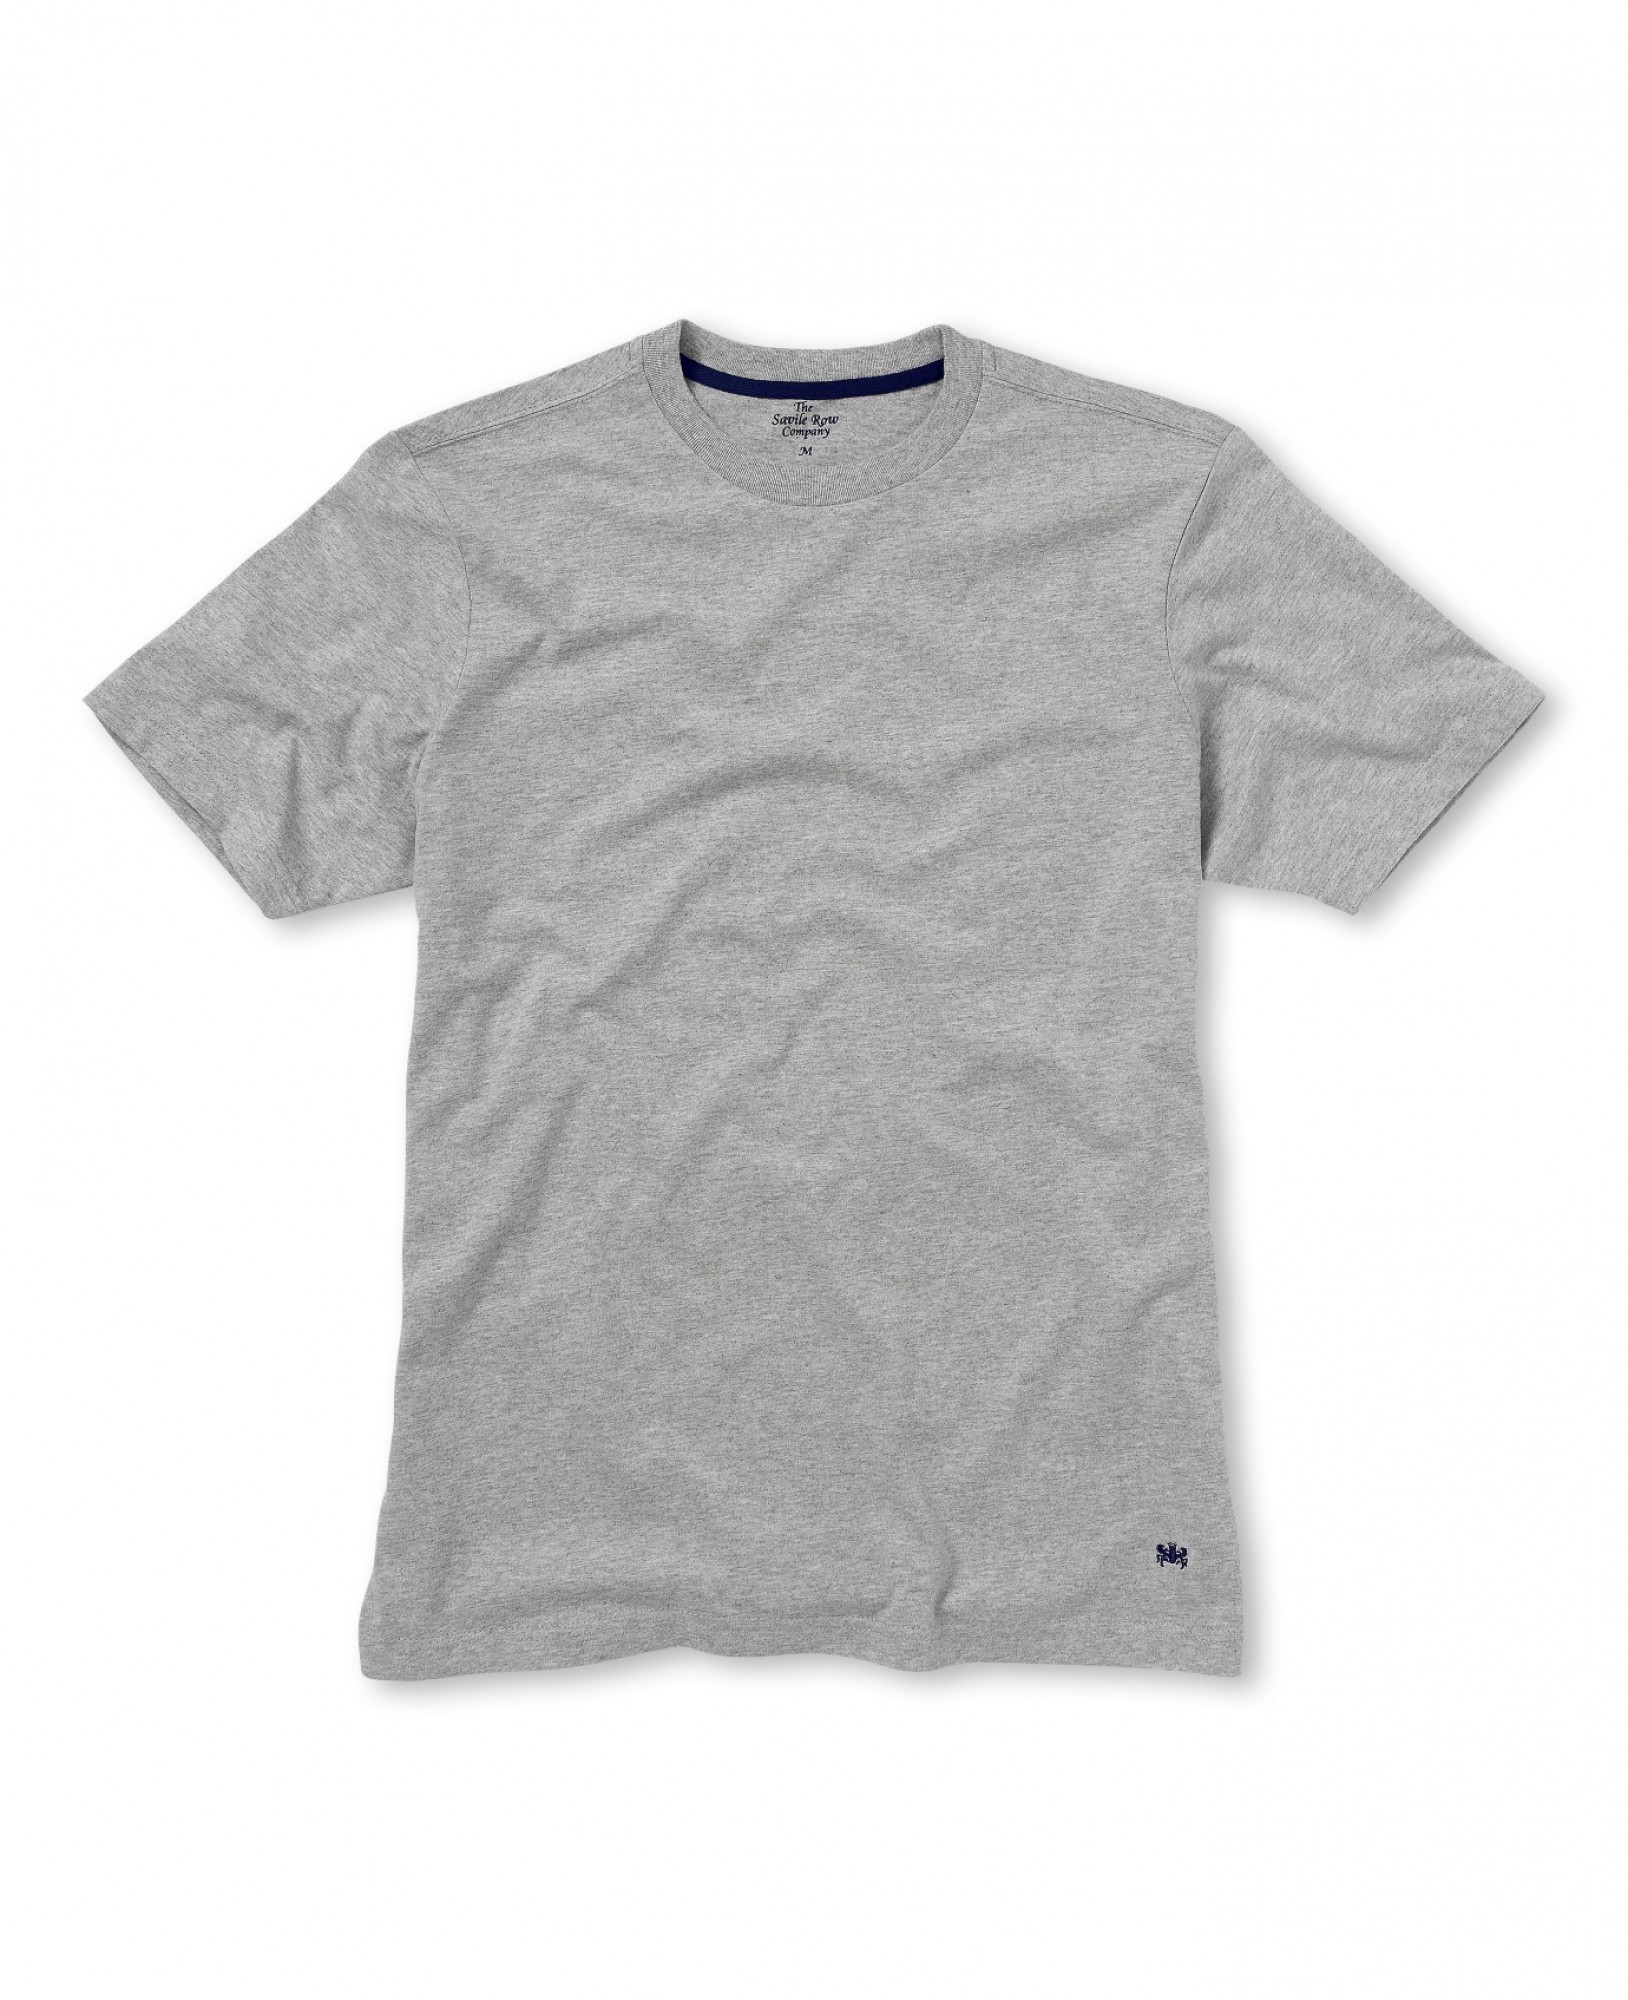 Savile Row Co. Grey Short Sleeve T-Shirt L